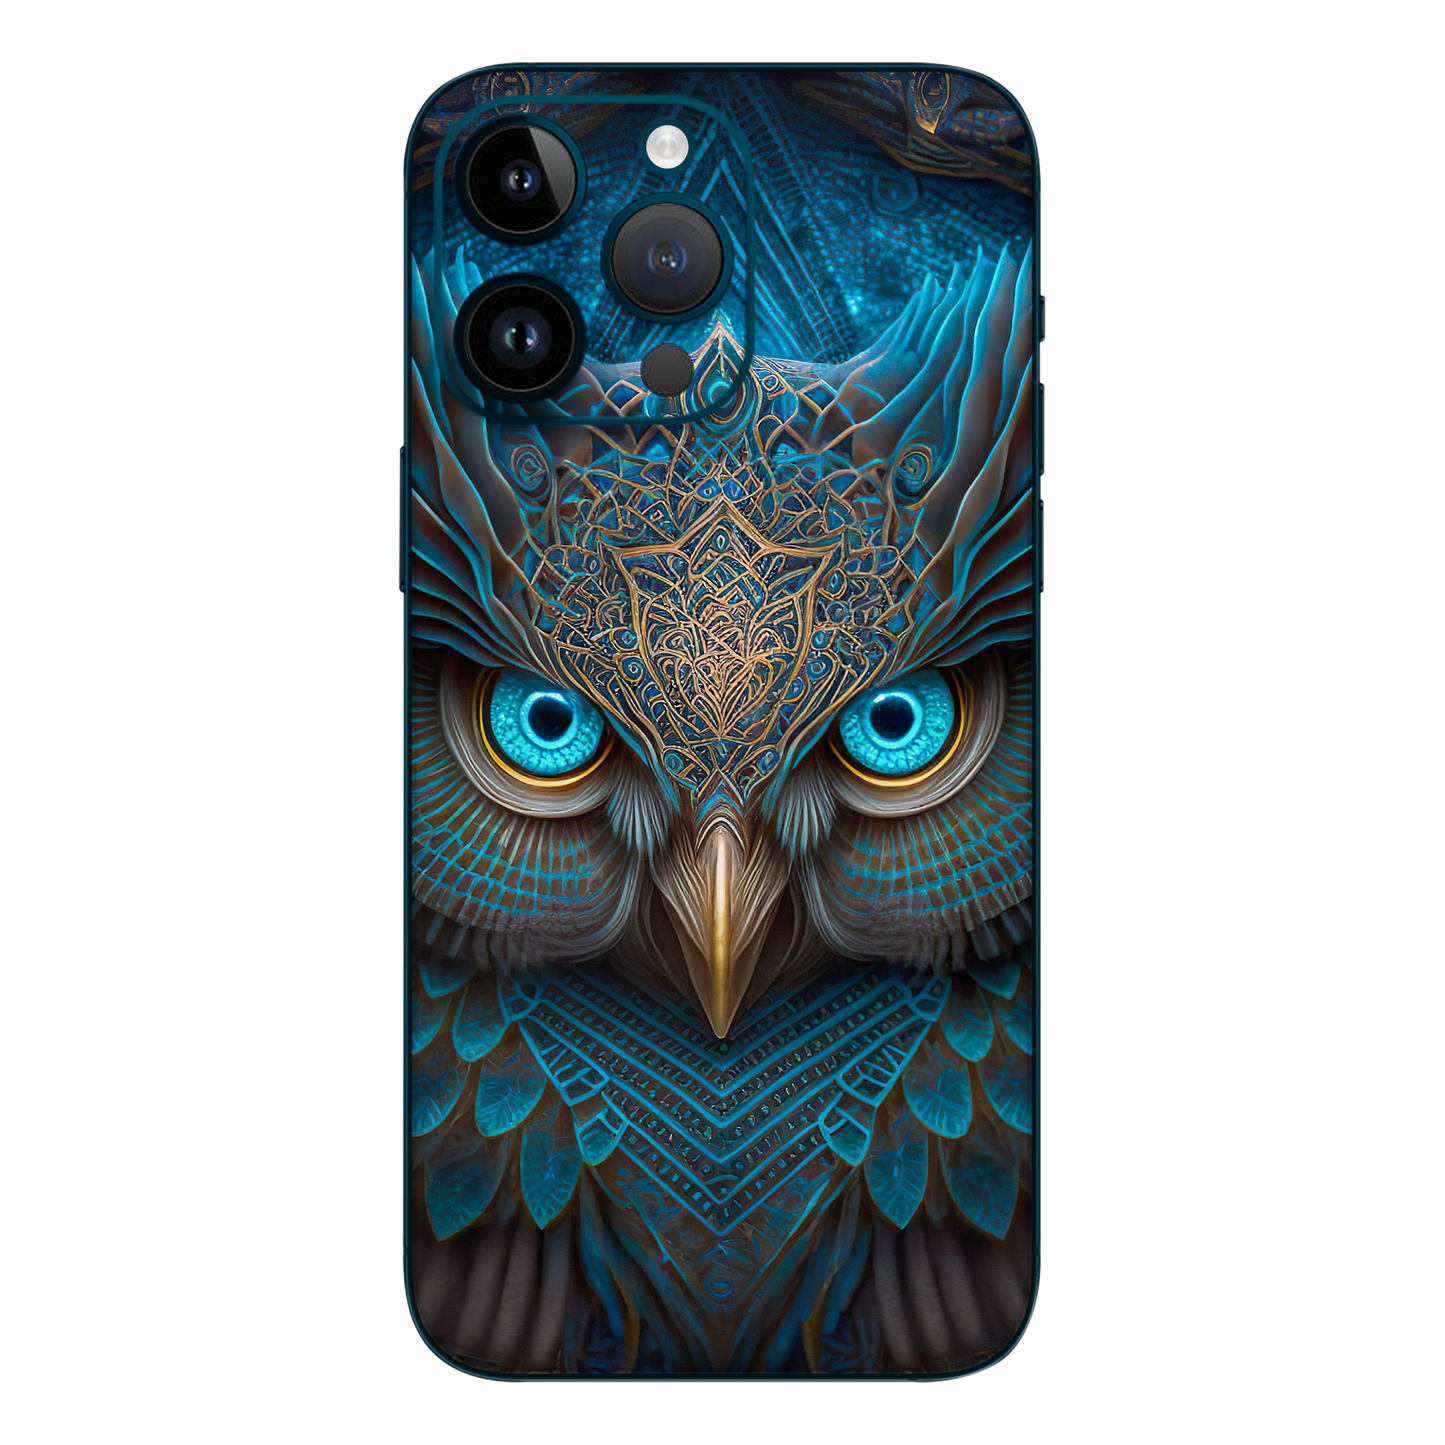 Wrapie Blue Mighty Owl Mobile Skin